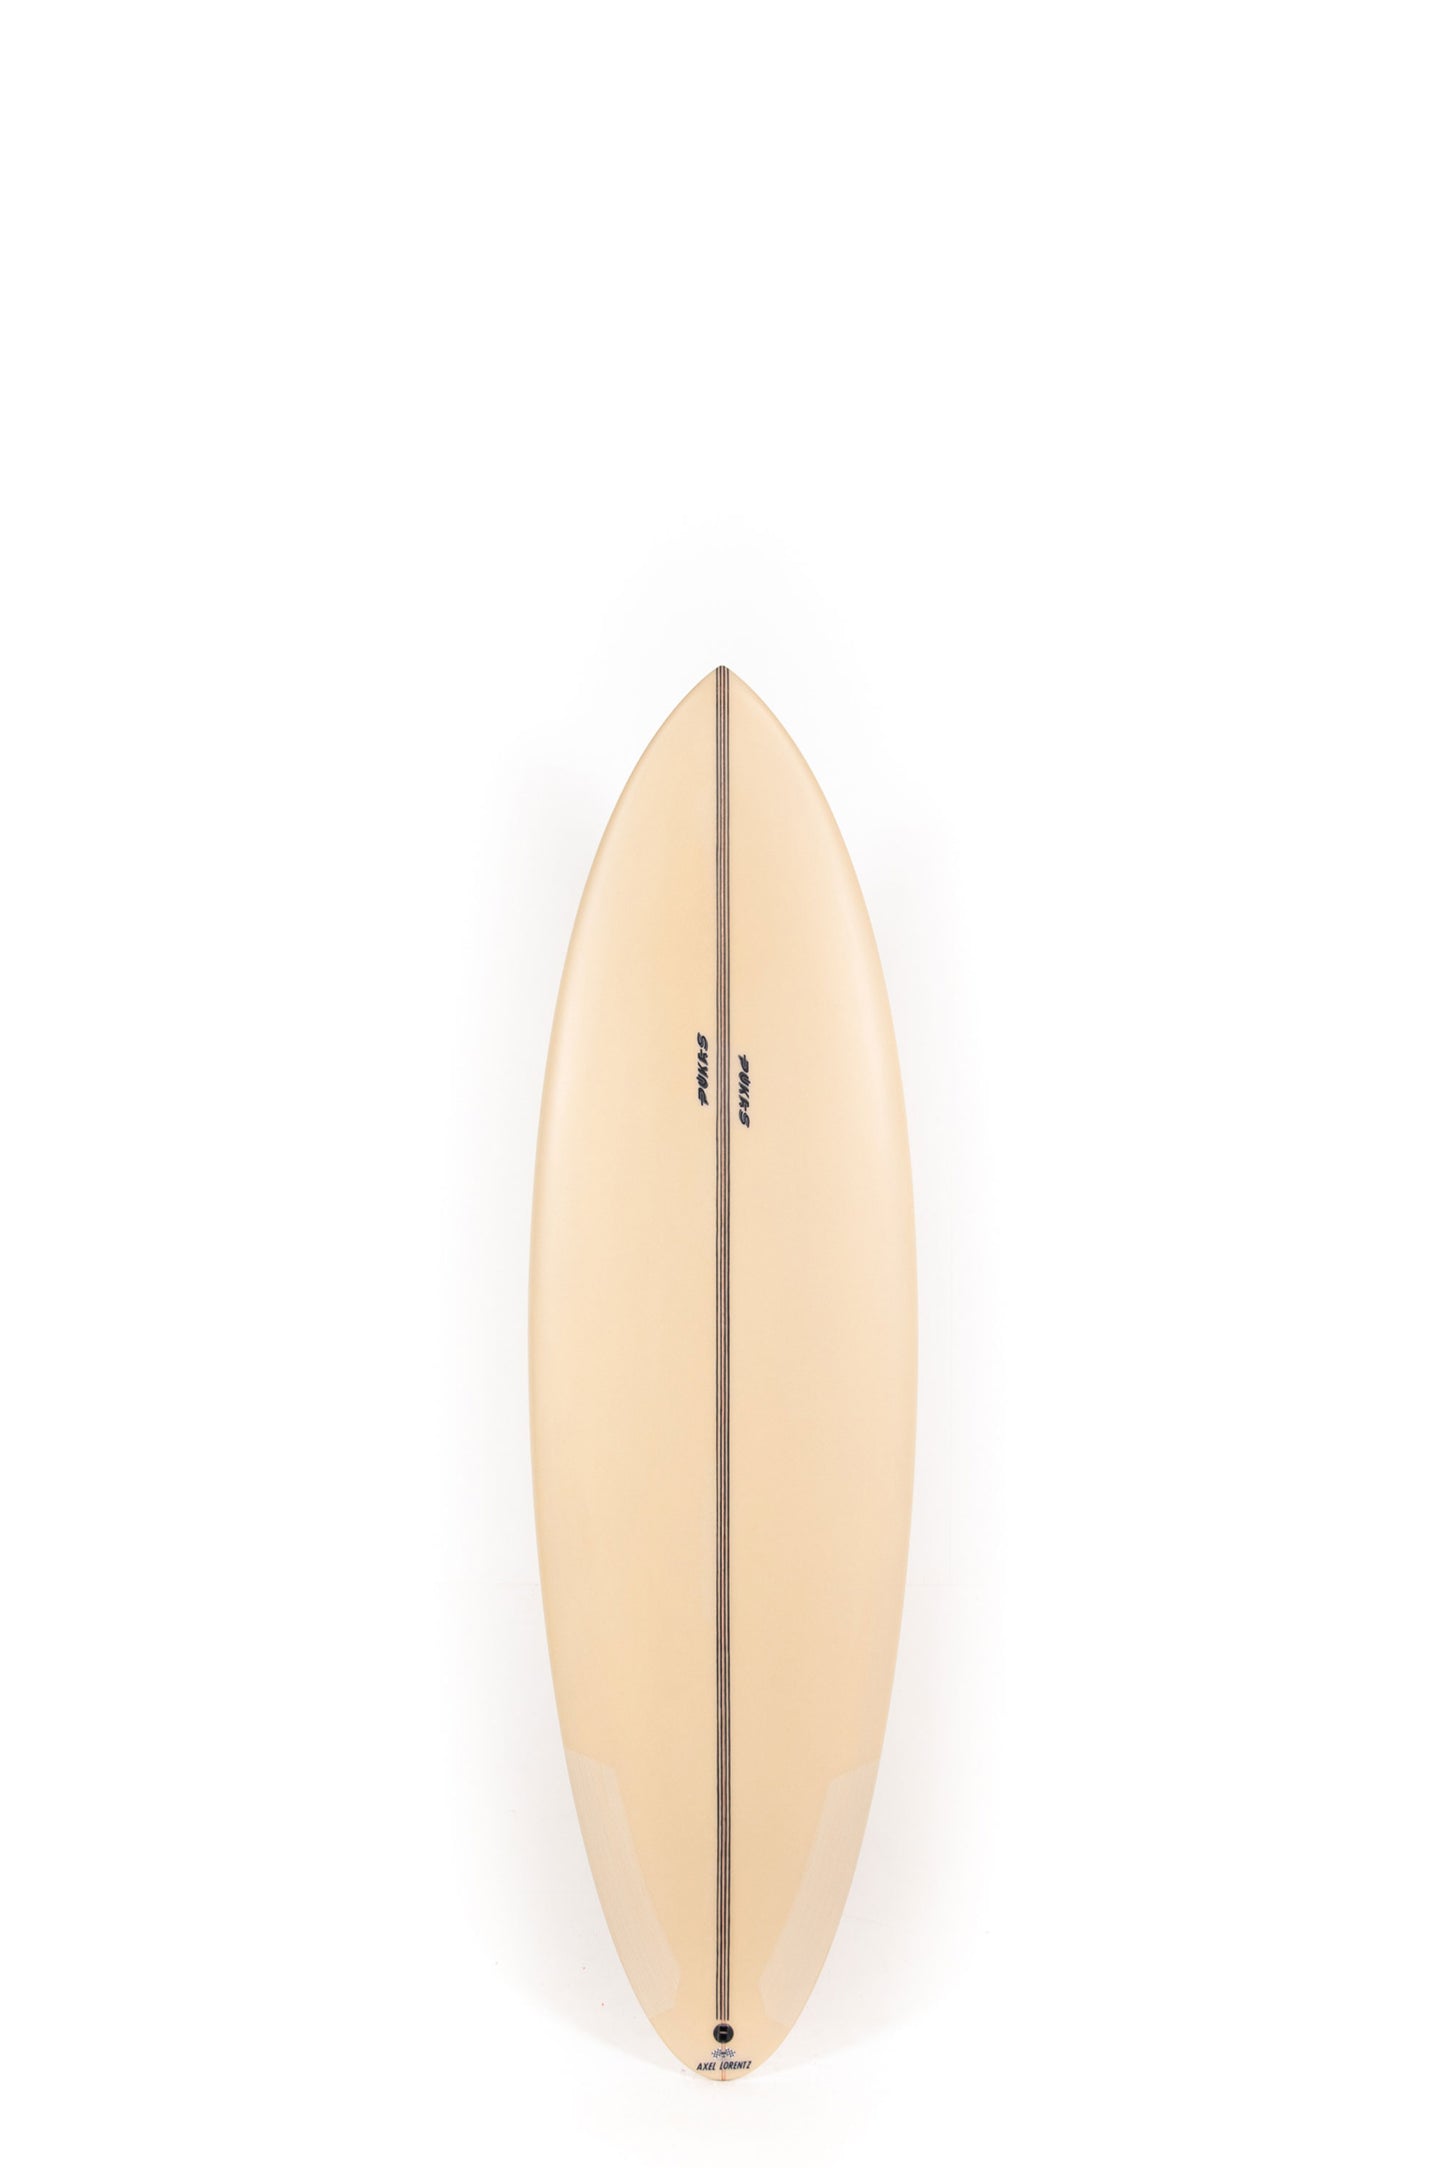 Pukas Surf Shop - Pukas Surfboard - 69ER EVOLUTION by Axel Lorentz- 6’2” x 20,75 x 2.63 - 35,72L - AX10503